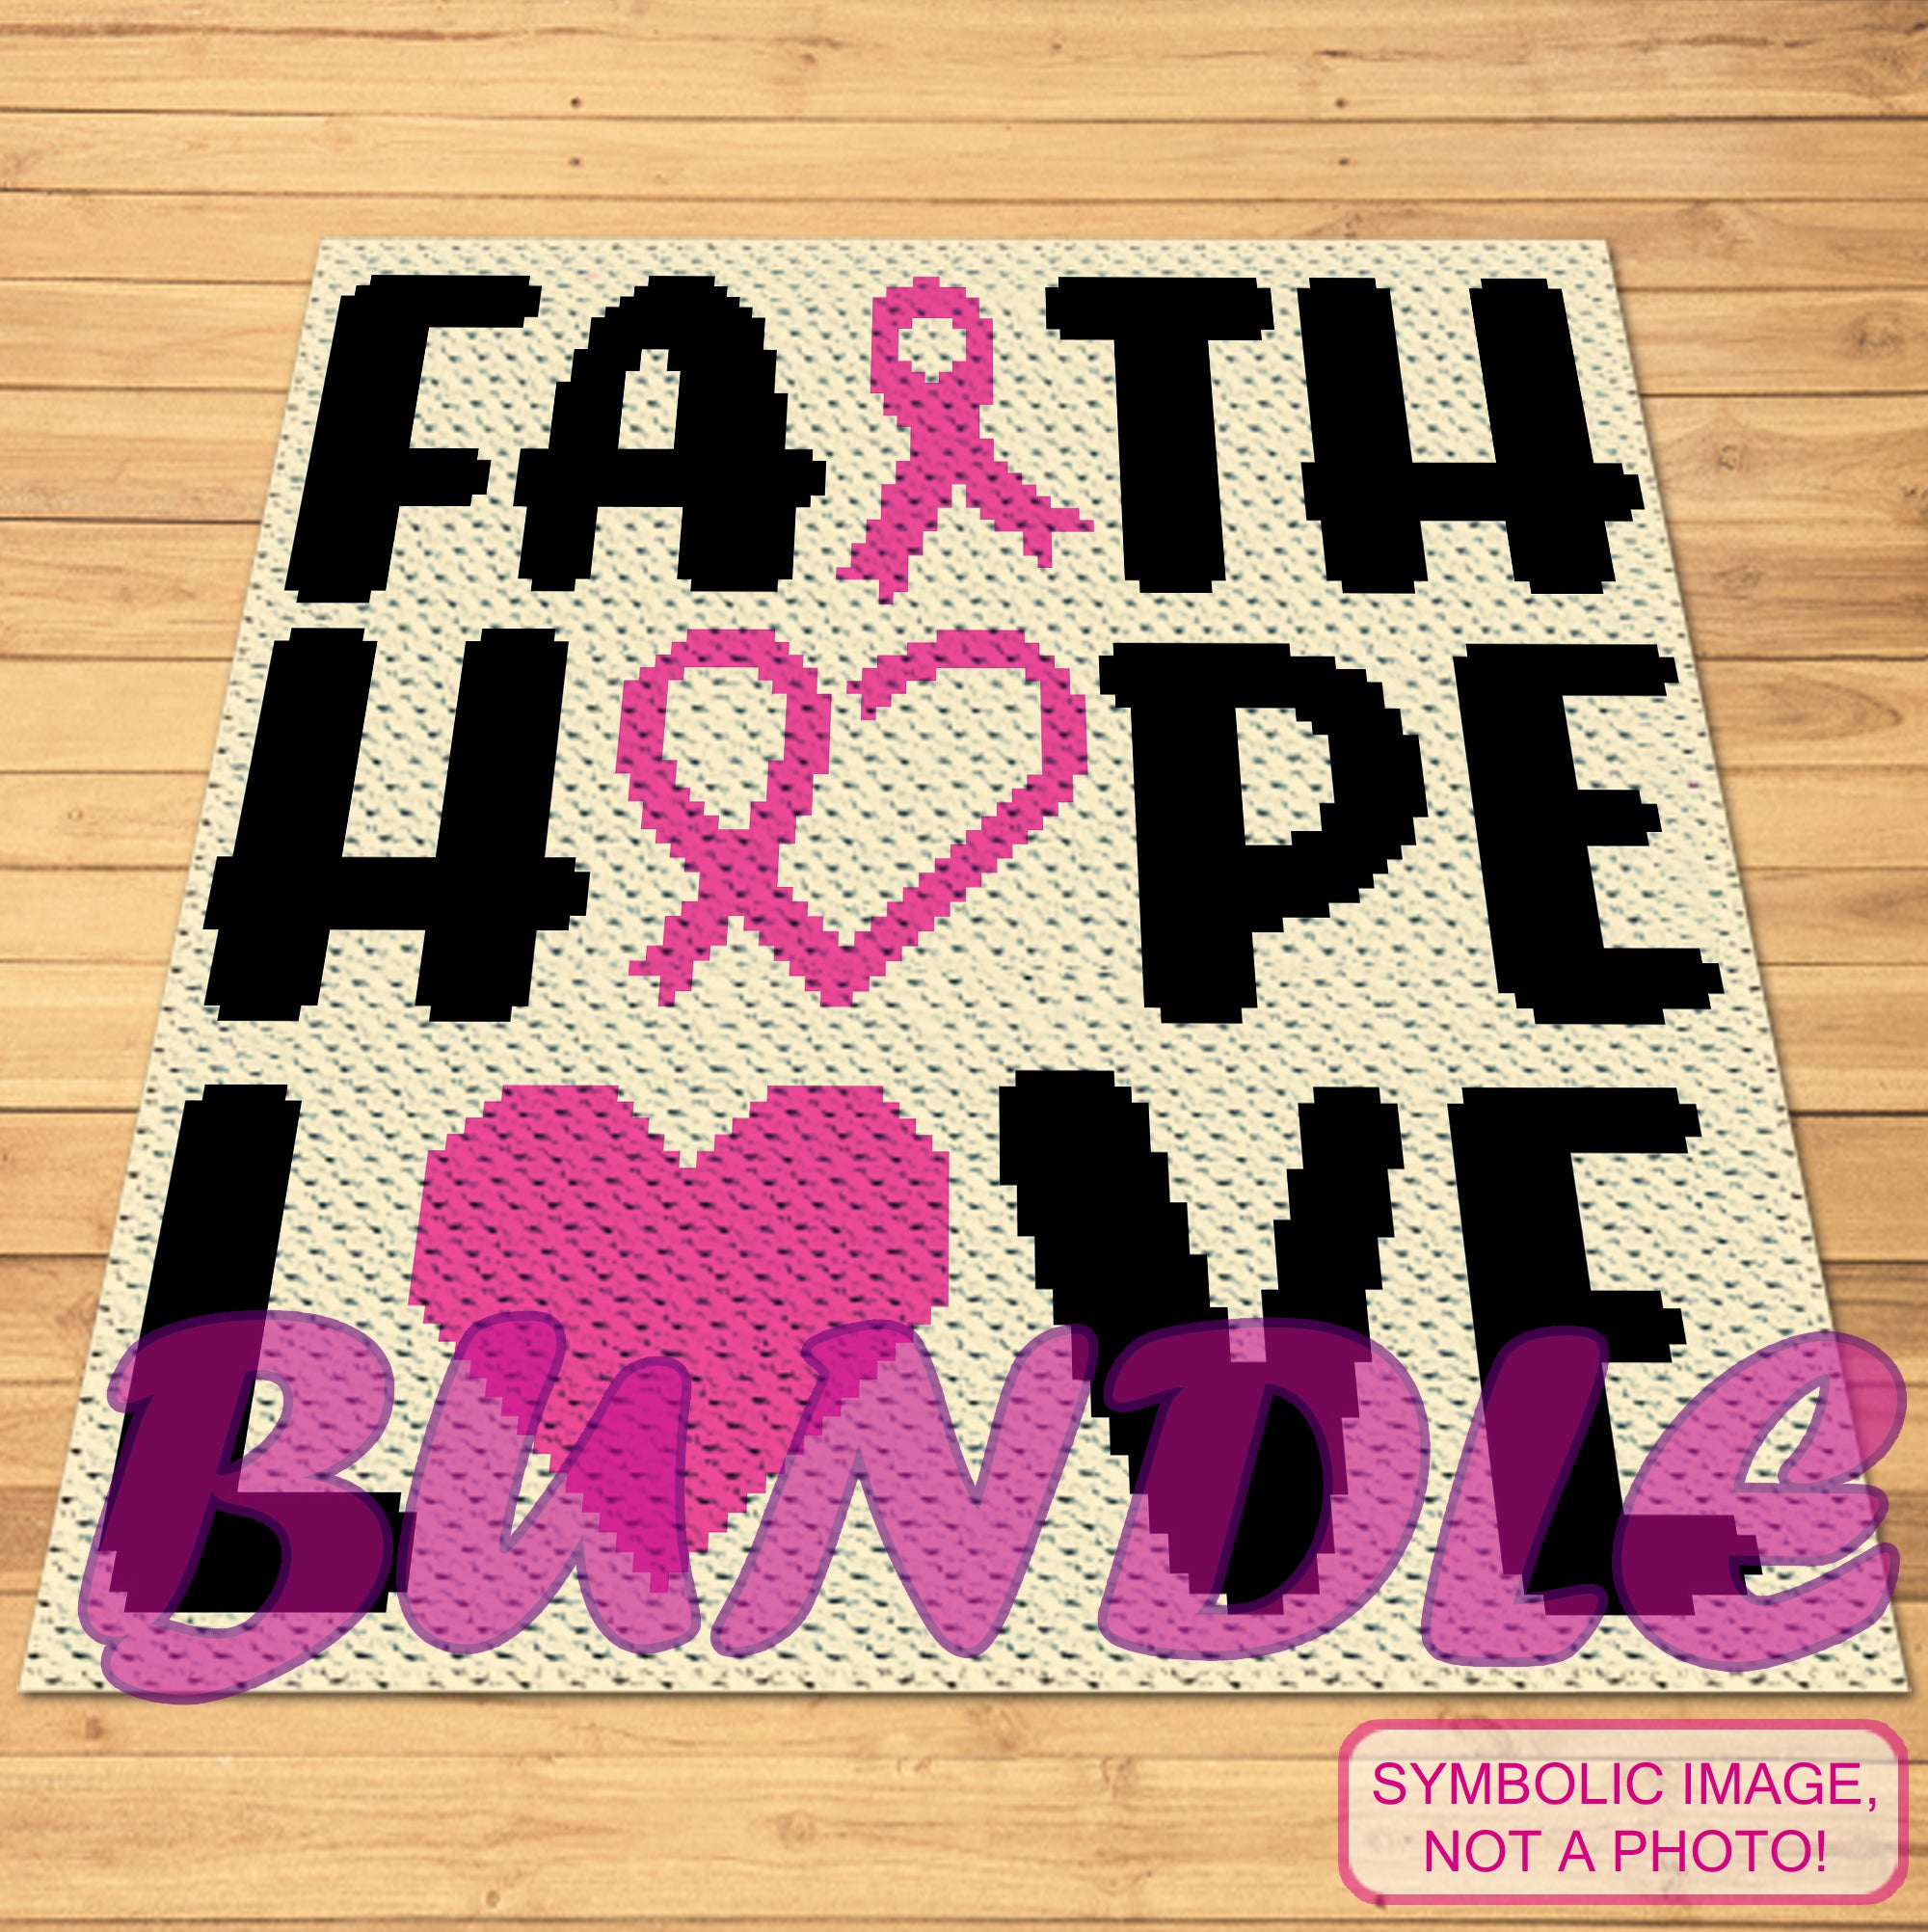 Faith Hope Love Crochet BUNDLE: C2C Blanket Pattern, Crochet Pillow Pattern